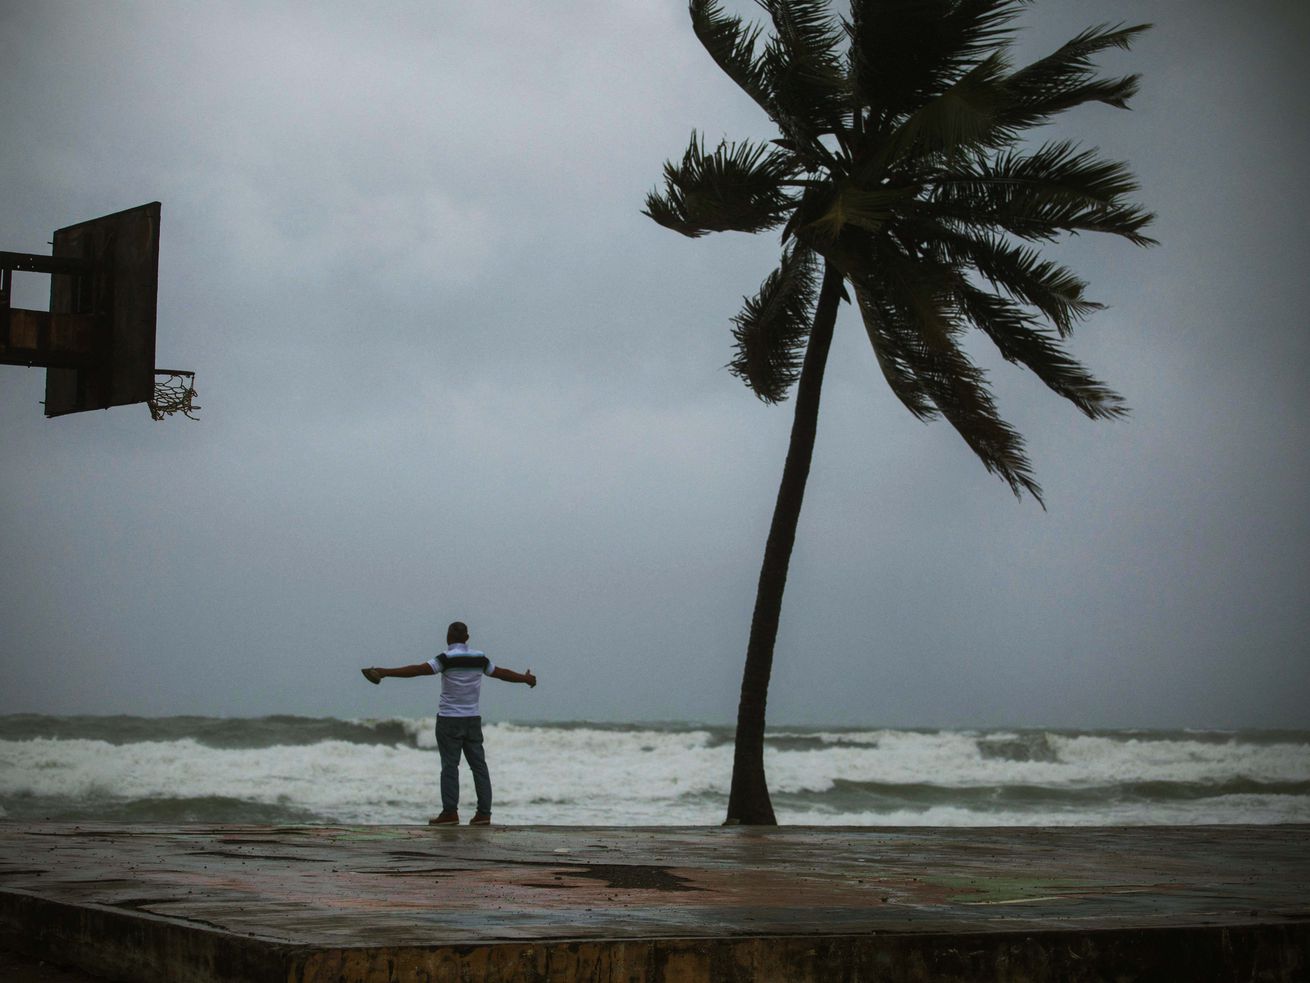 What made Hurricane Fiona so dangerous in Puerto Rico